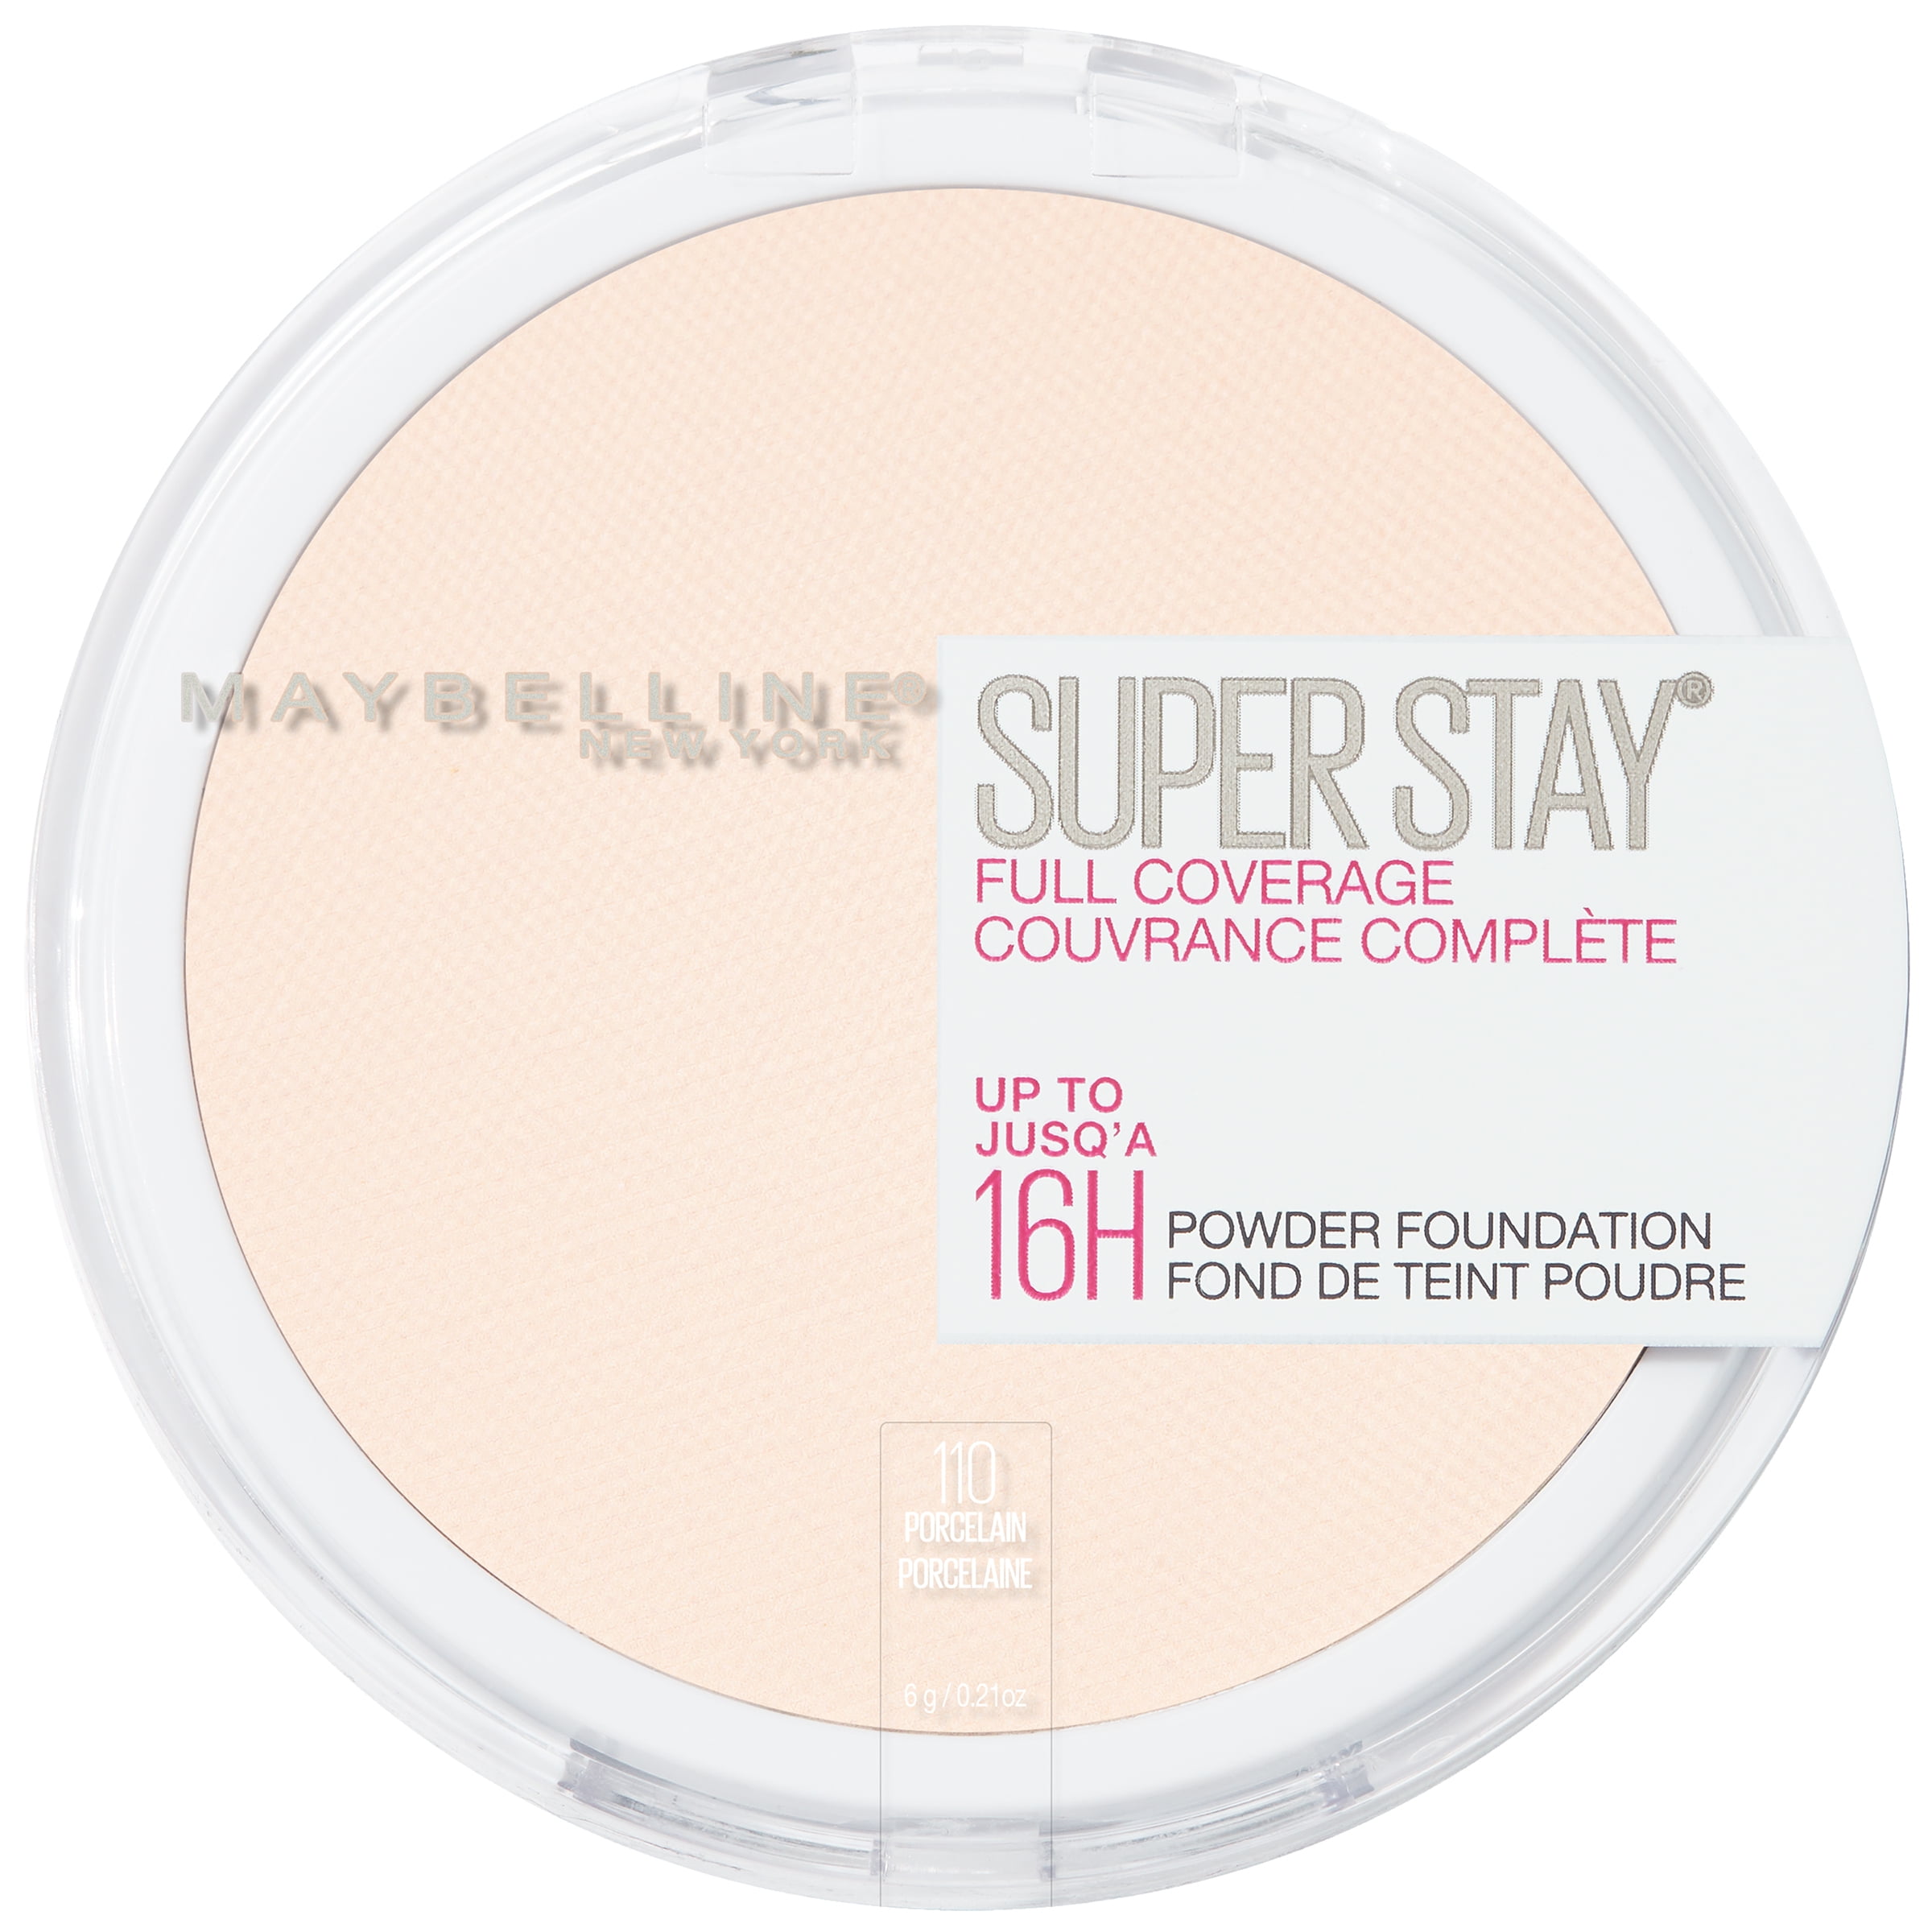 Maybelline Super Stay Full Coverage Powder Foundation Makeup, Matte Finish, Porcelain, 0.21 oz